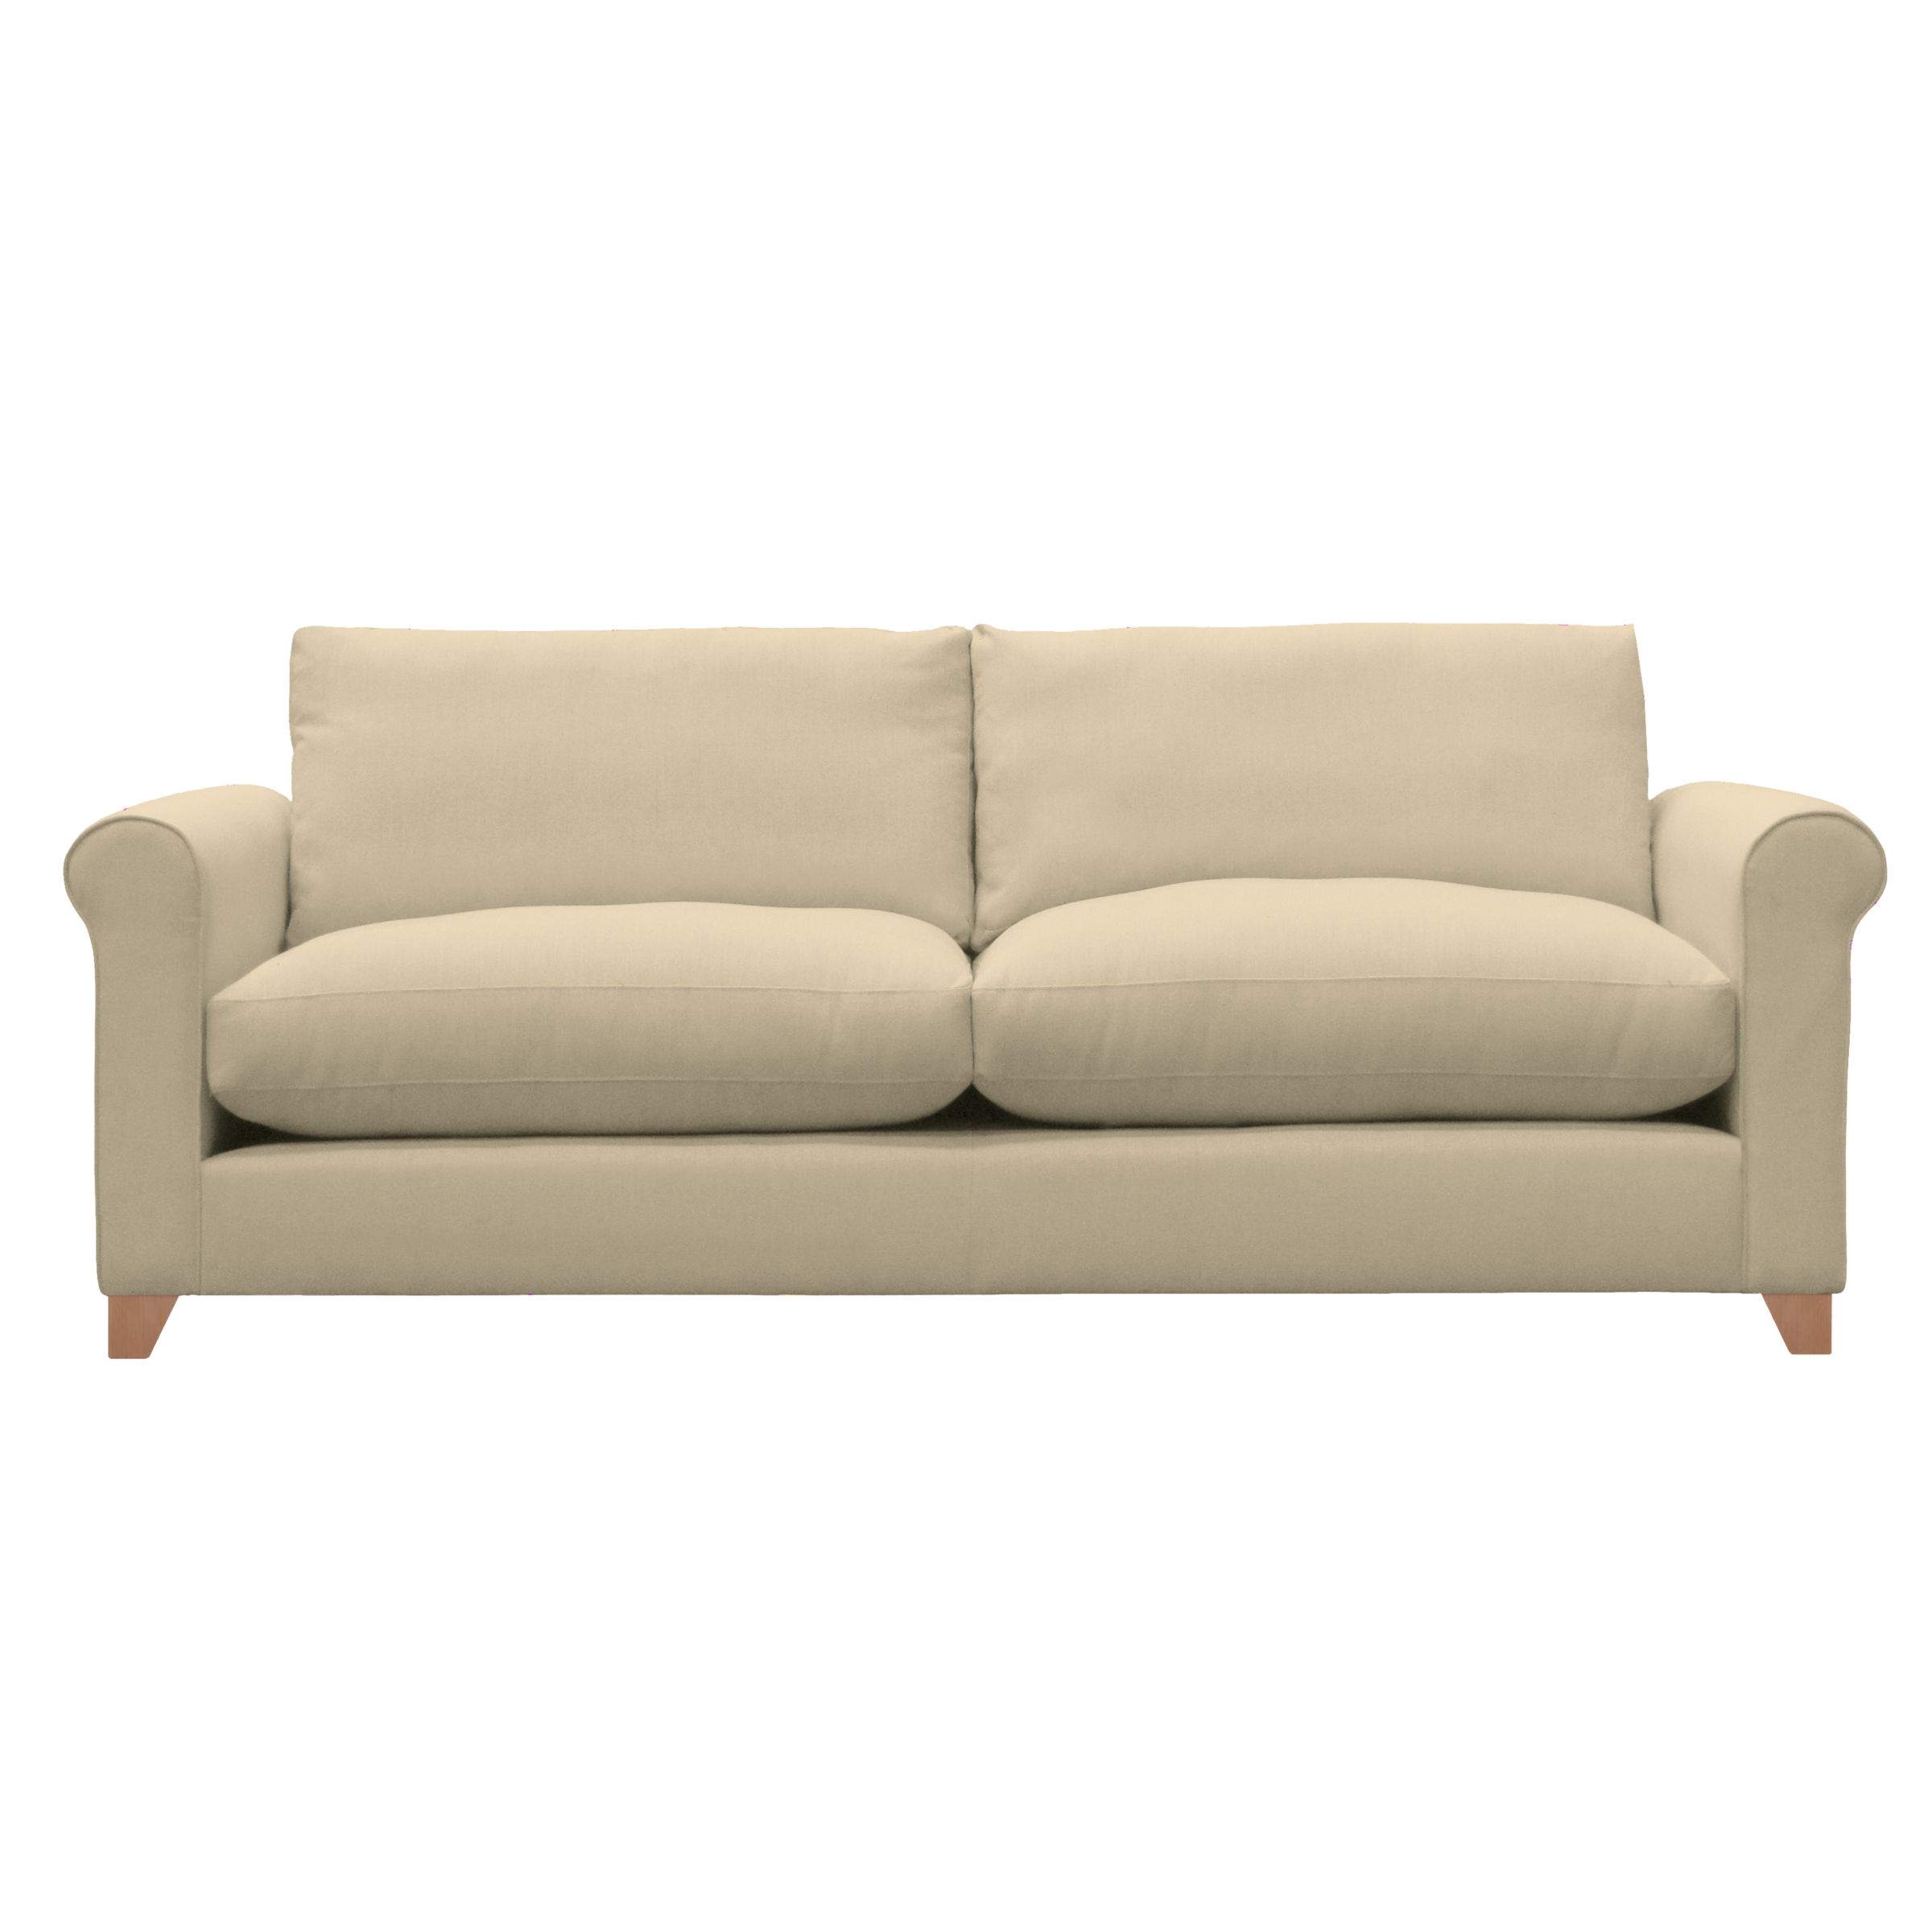 John Lewis Options Scroll Arm Grand Sofa, Eaton Taupe, width 217cm